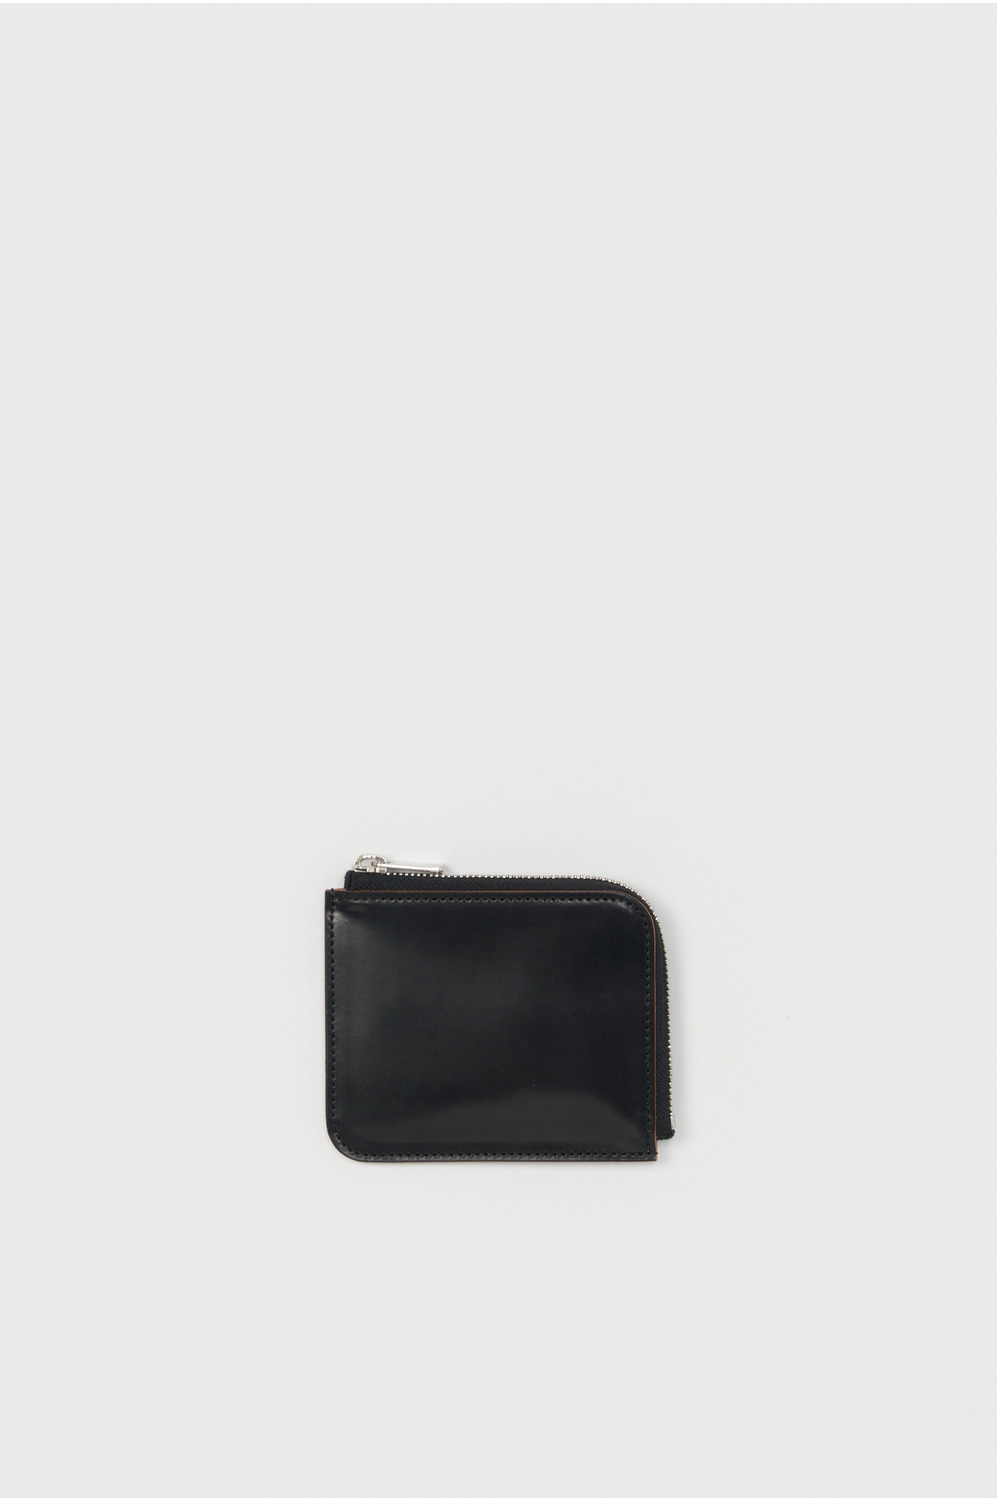 L purse 詳細画像 black 1